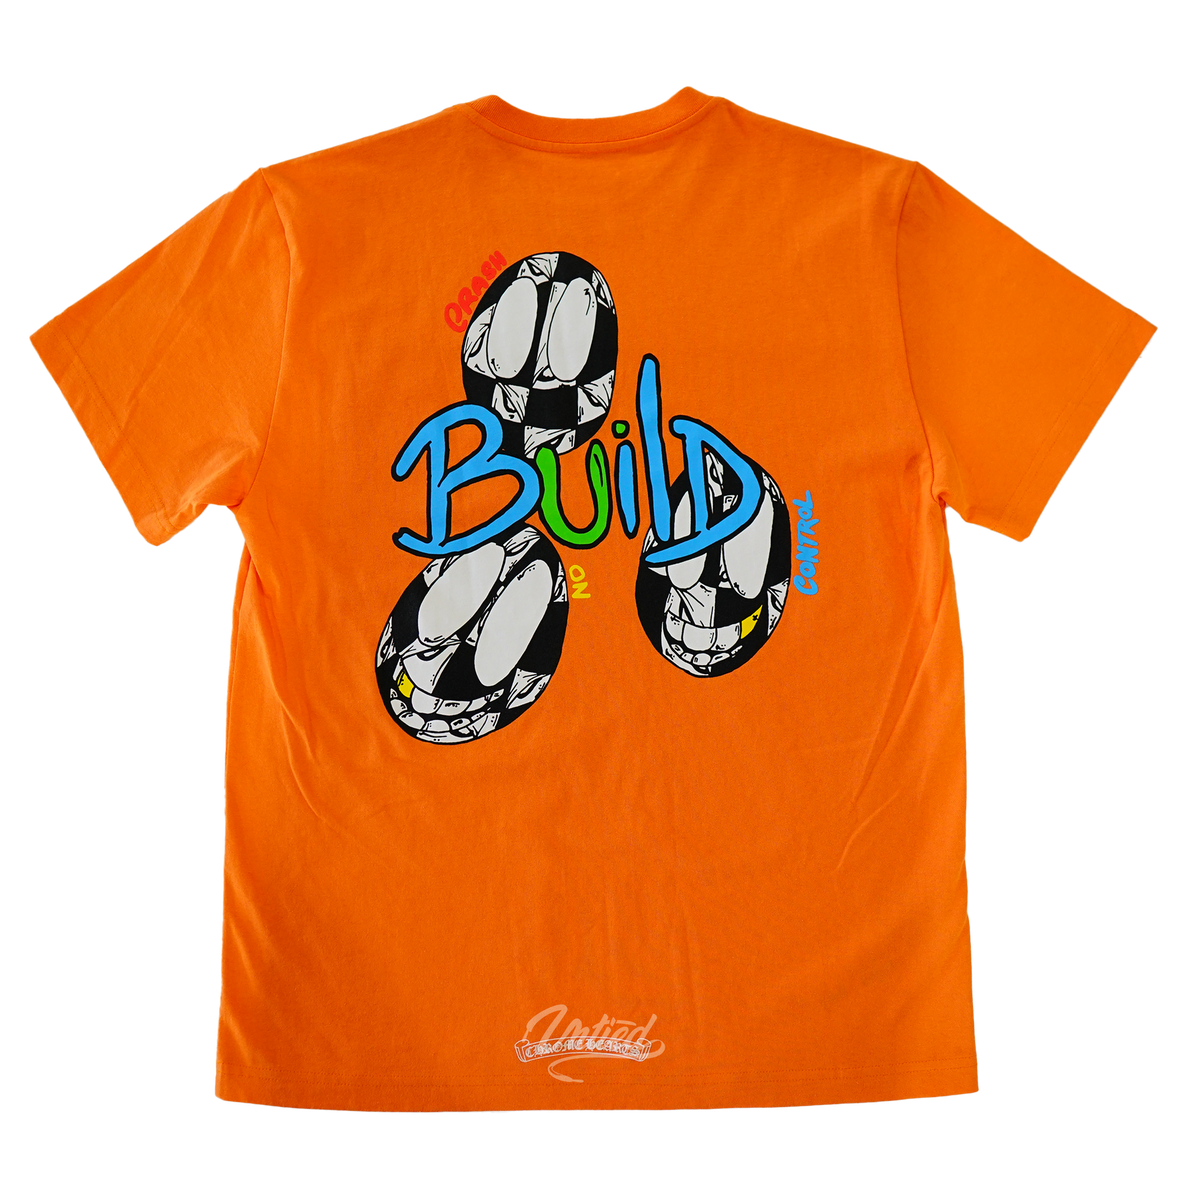 Chrome Hearts Matty Boy Link & Build T-shirt Orange